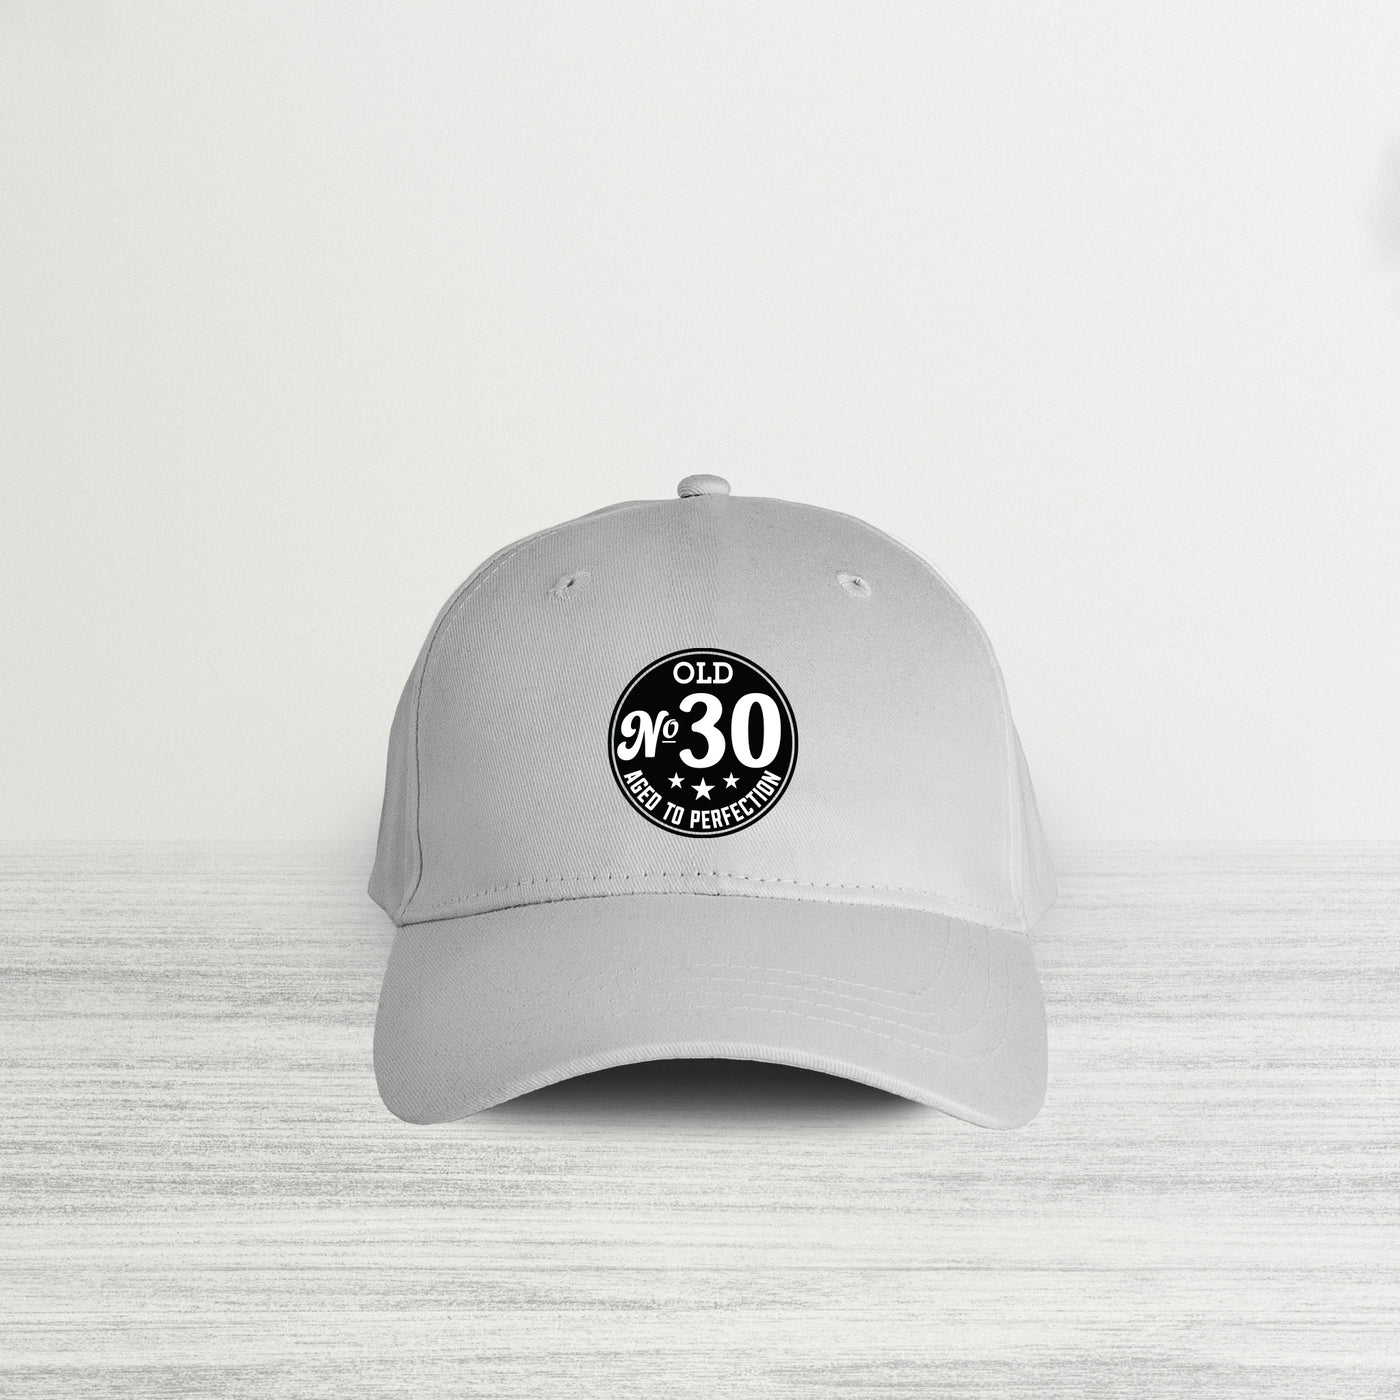 Old No 30 HAT